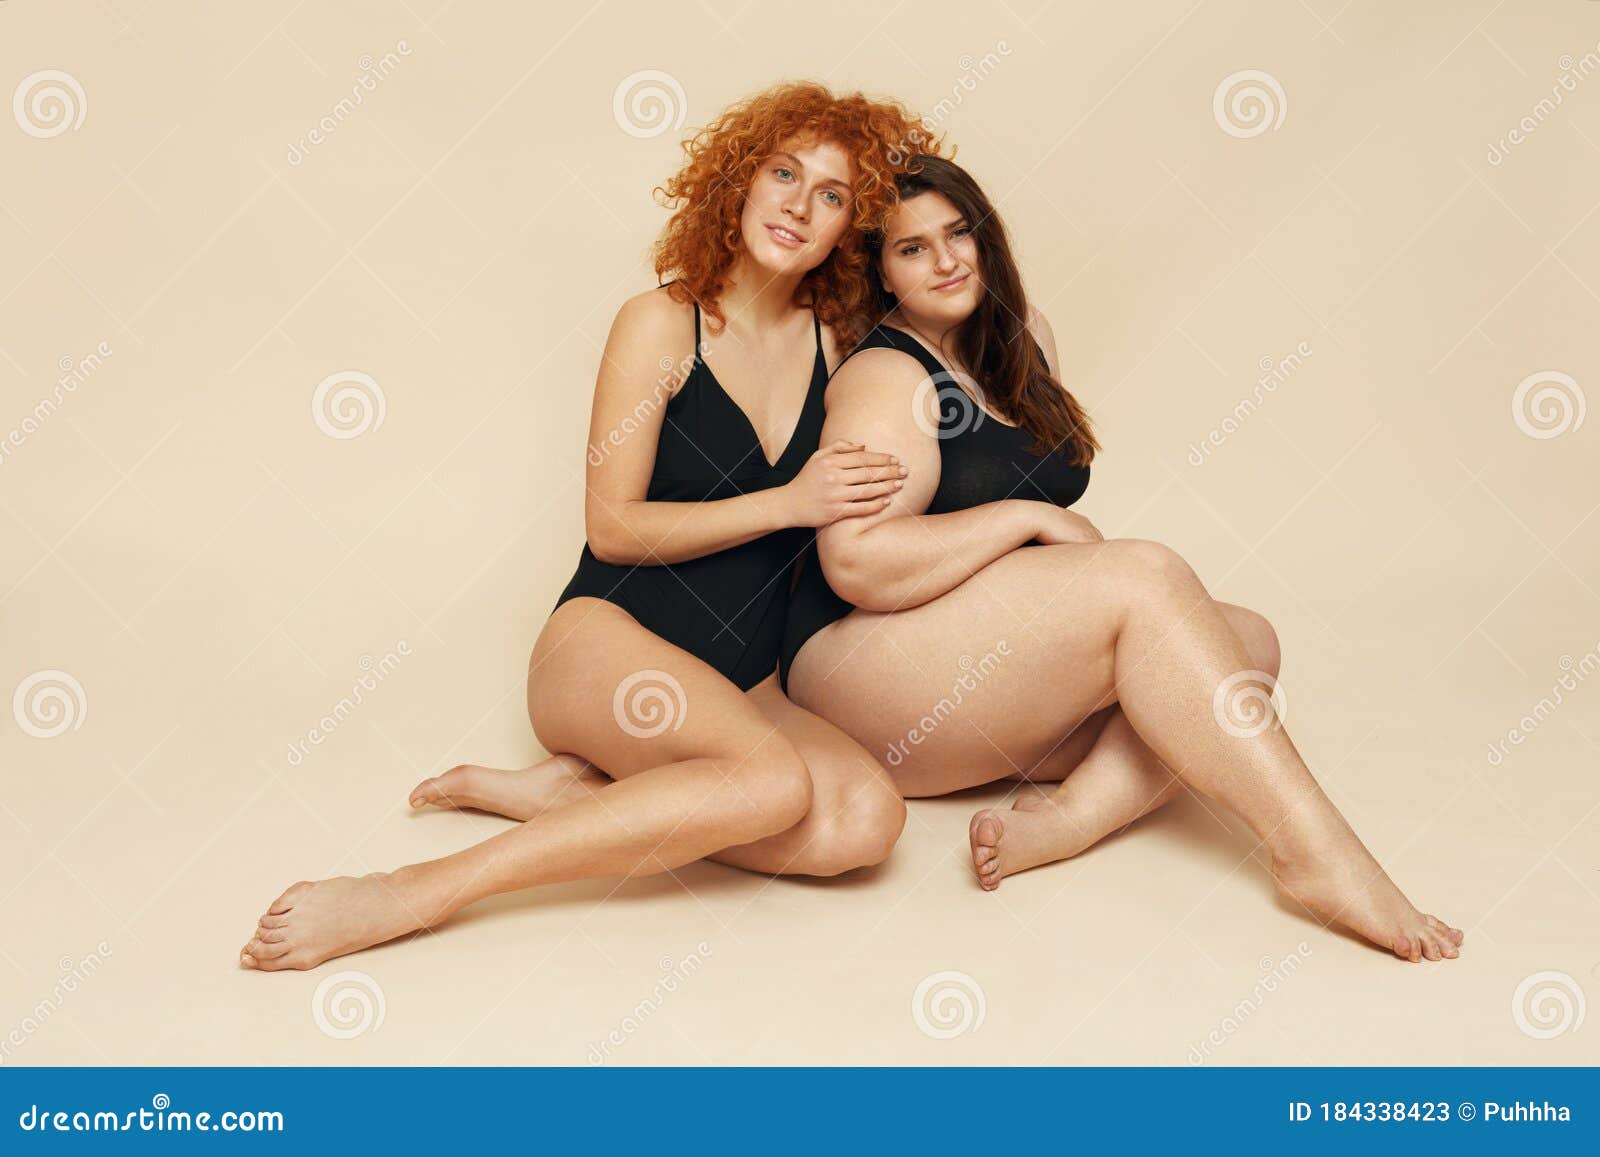 Different Size. Diversity Women Portrait. Female Friends Sitting on Floor image